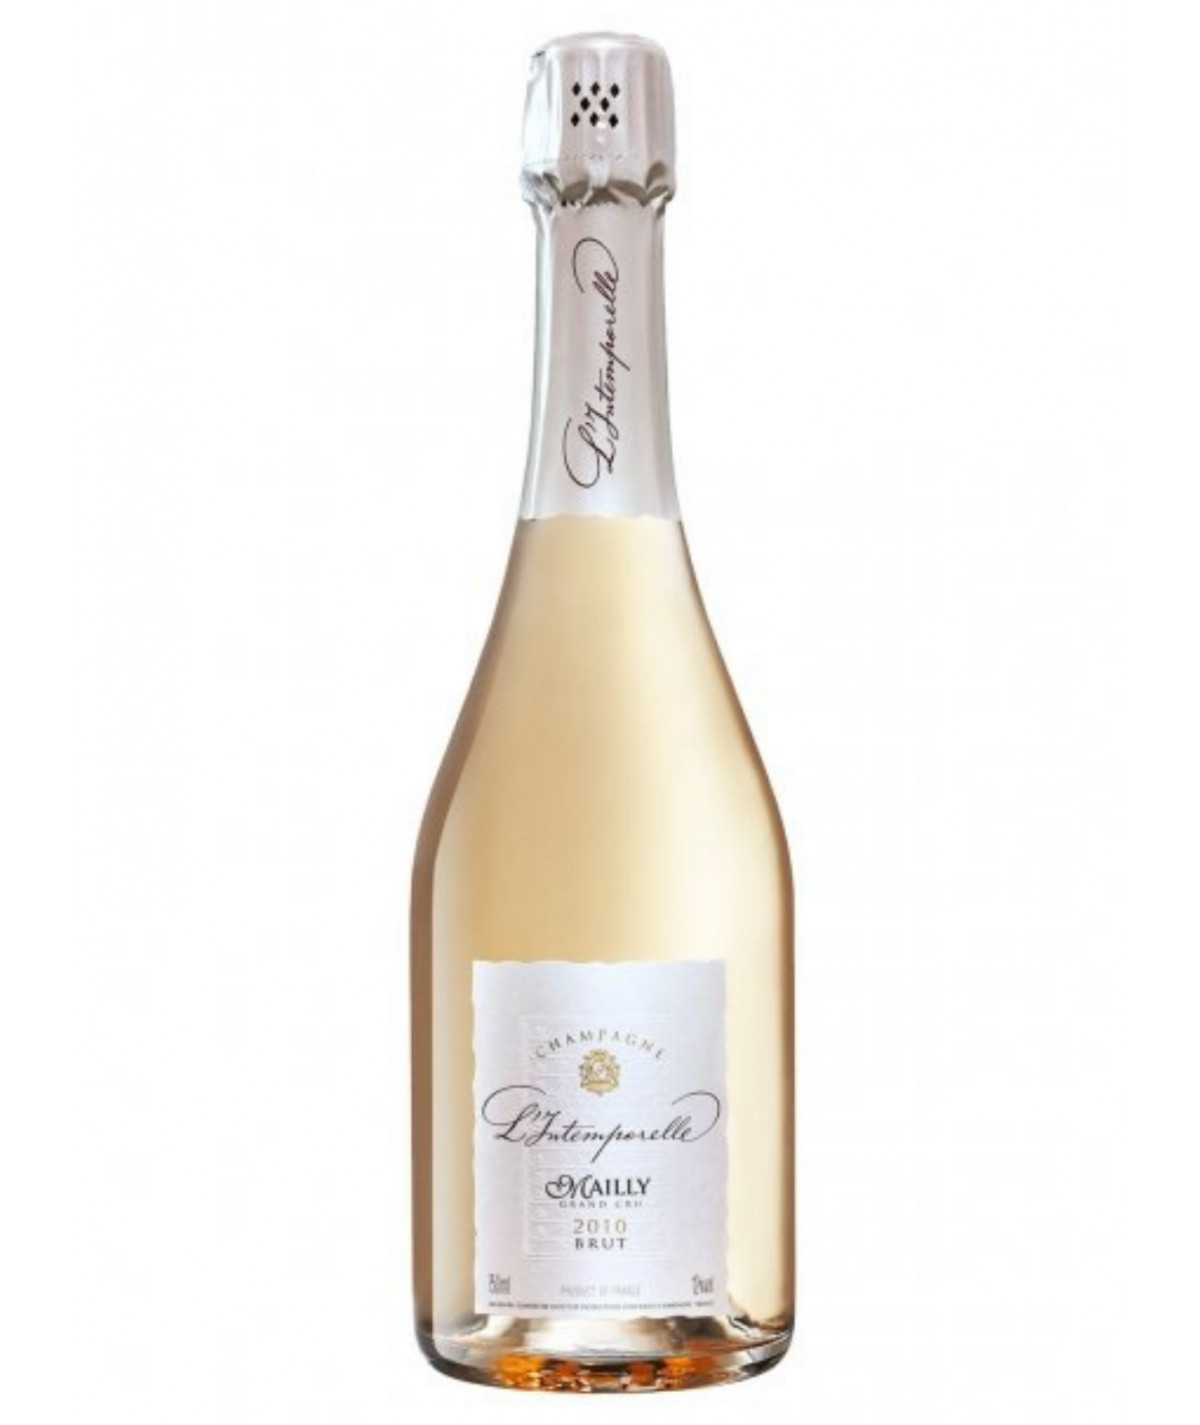 MAILLY GRAND CRU Champagne L’Intemporelle Brut 2012 vintage